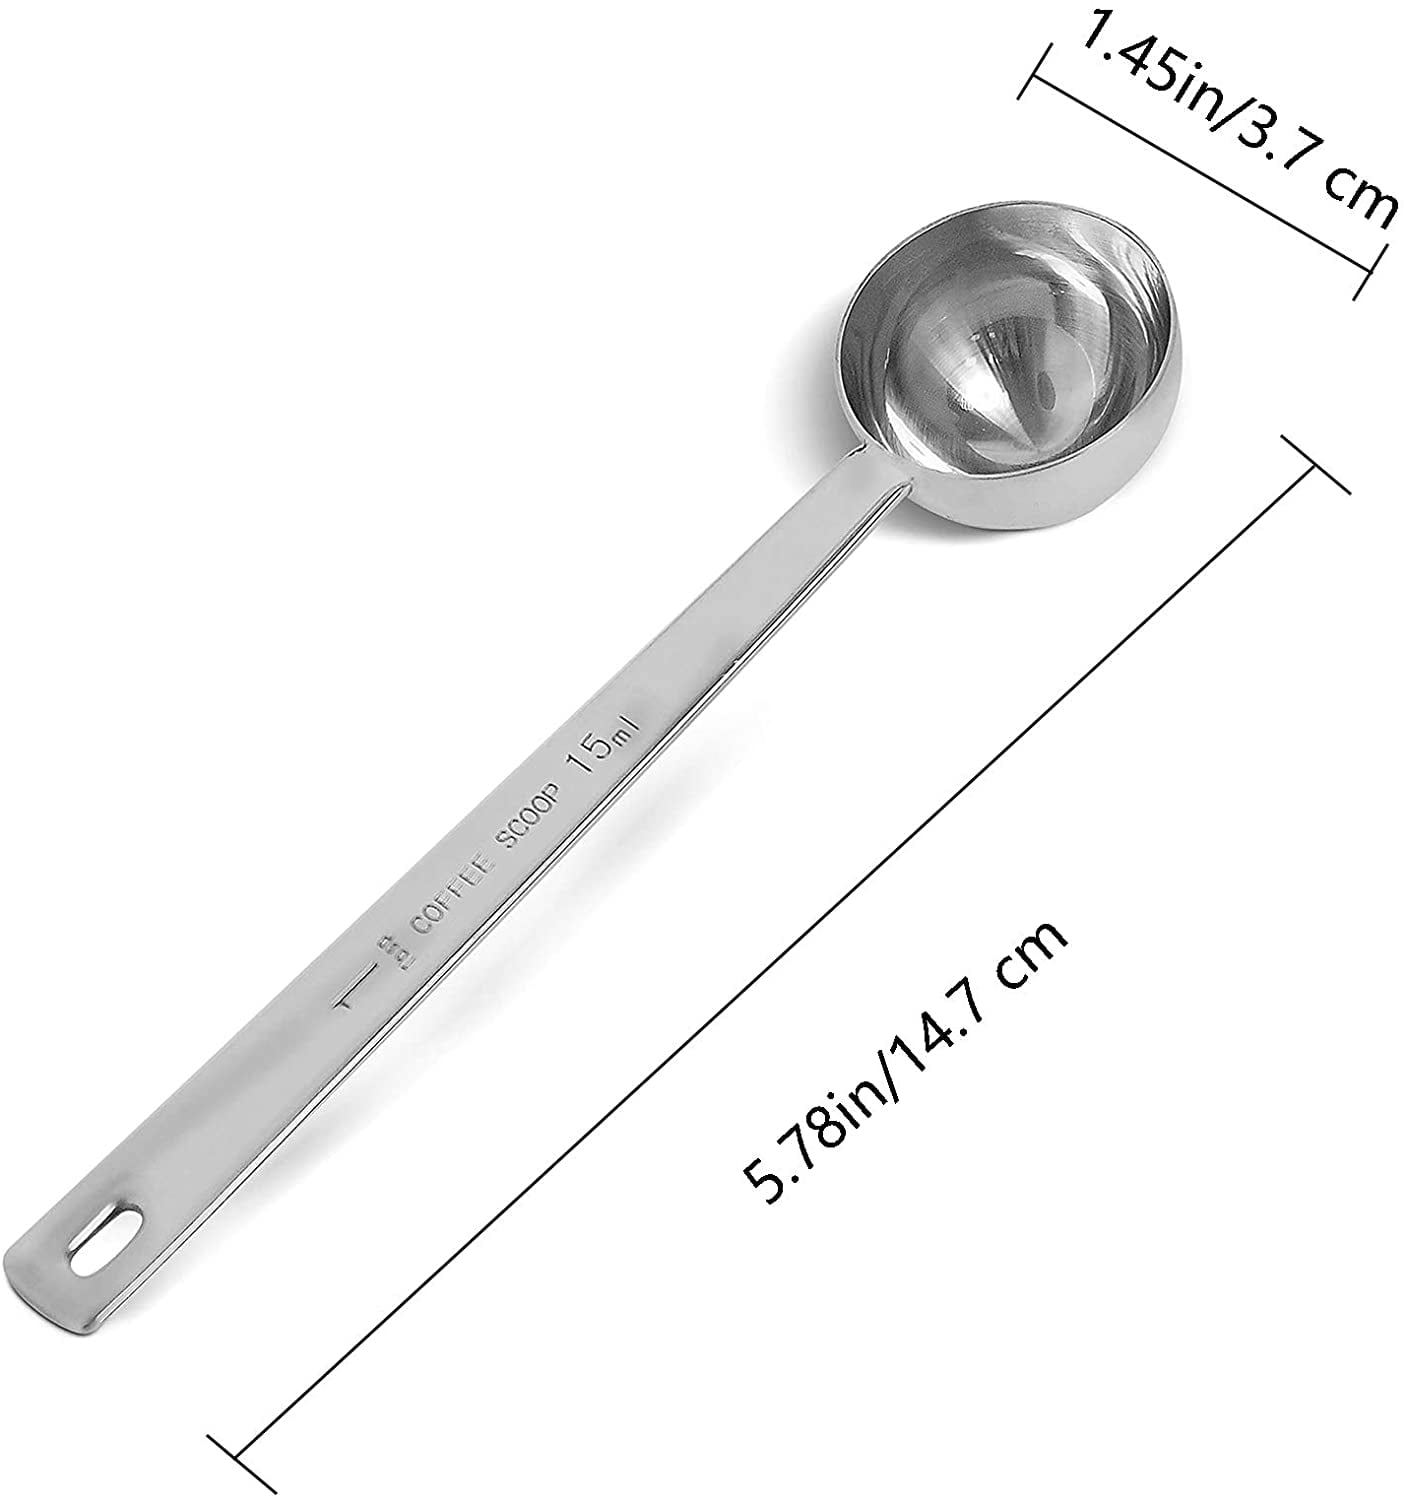 Hammered Aluminum 1/2oz (1 tbsp.) Coffee Scoop Measuring Spoon - 3 7/8”